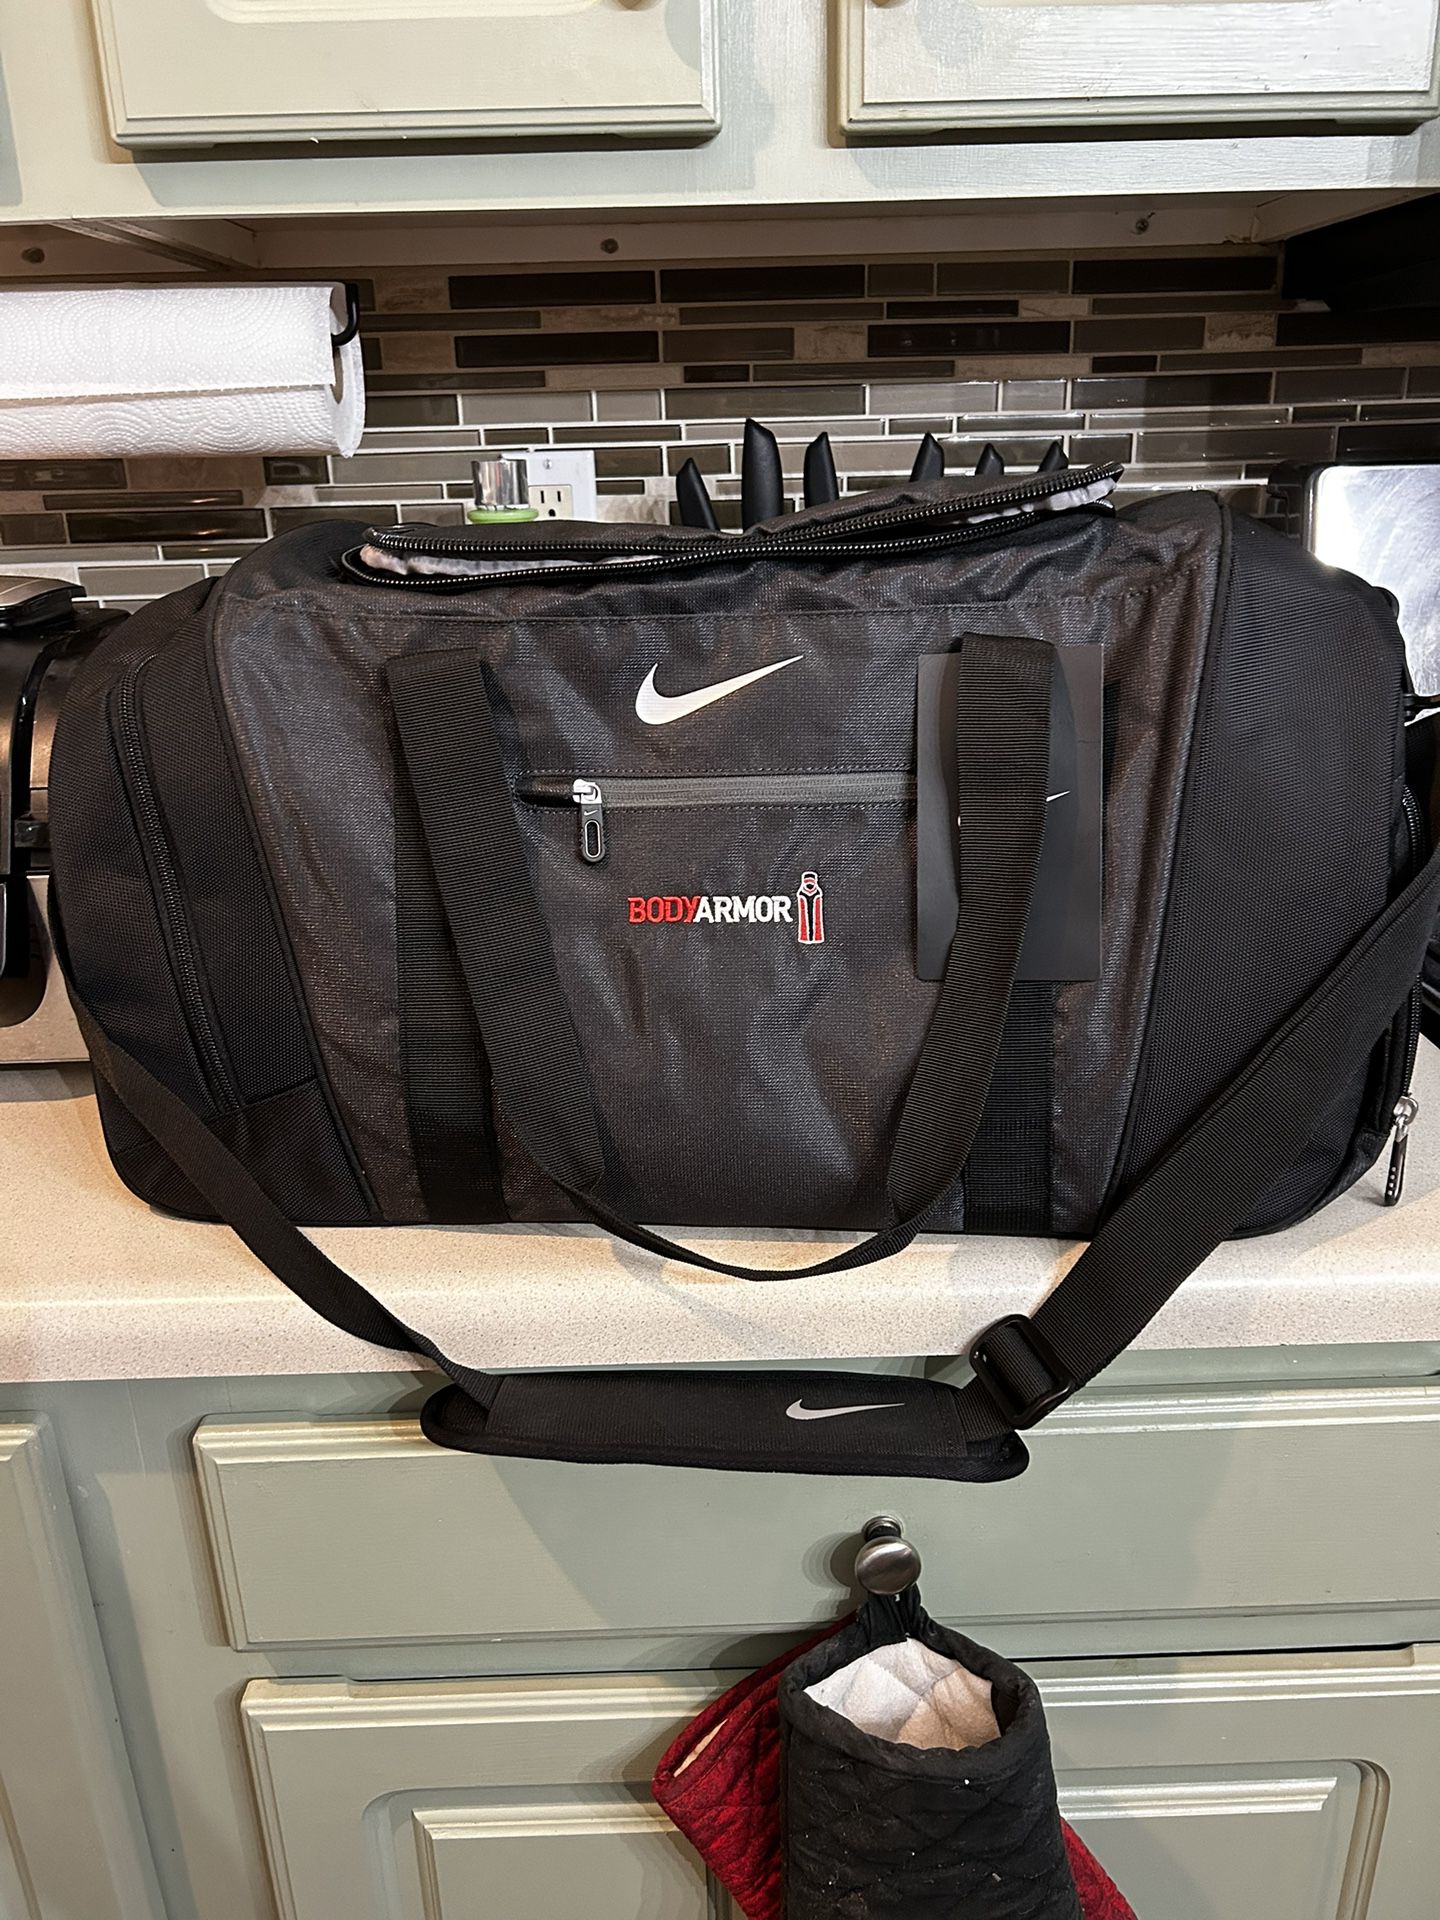 Nike Golf Duffle Bag with Bodyarmor Logo